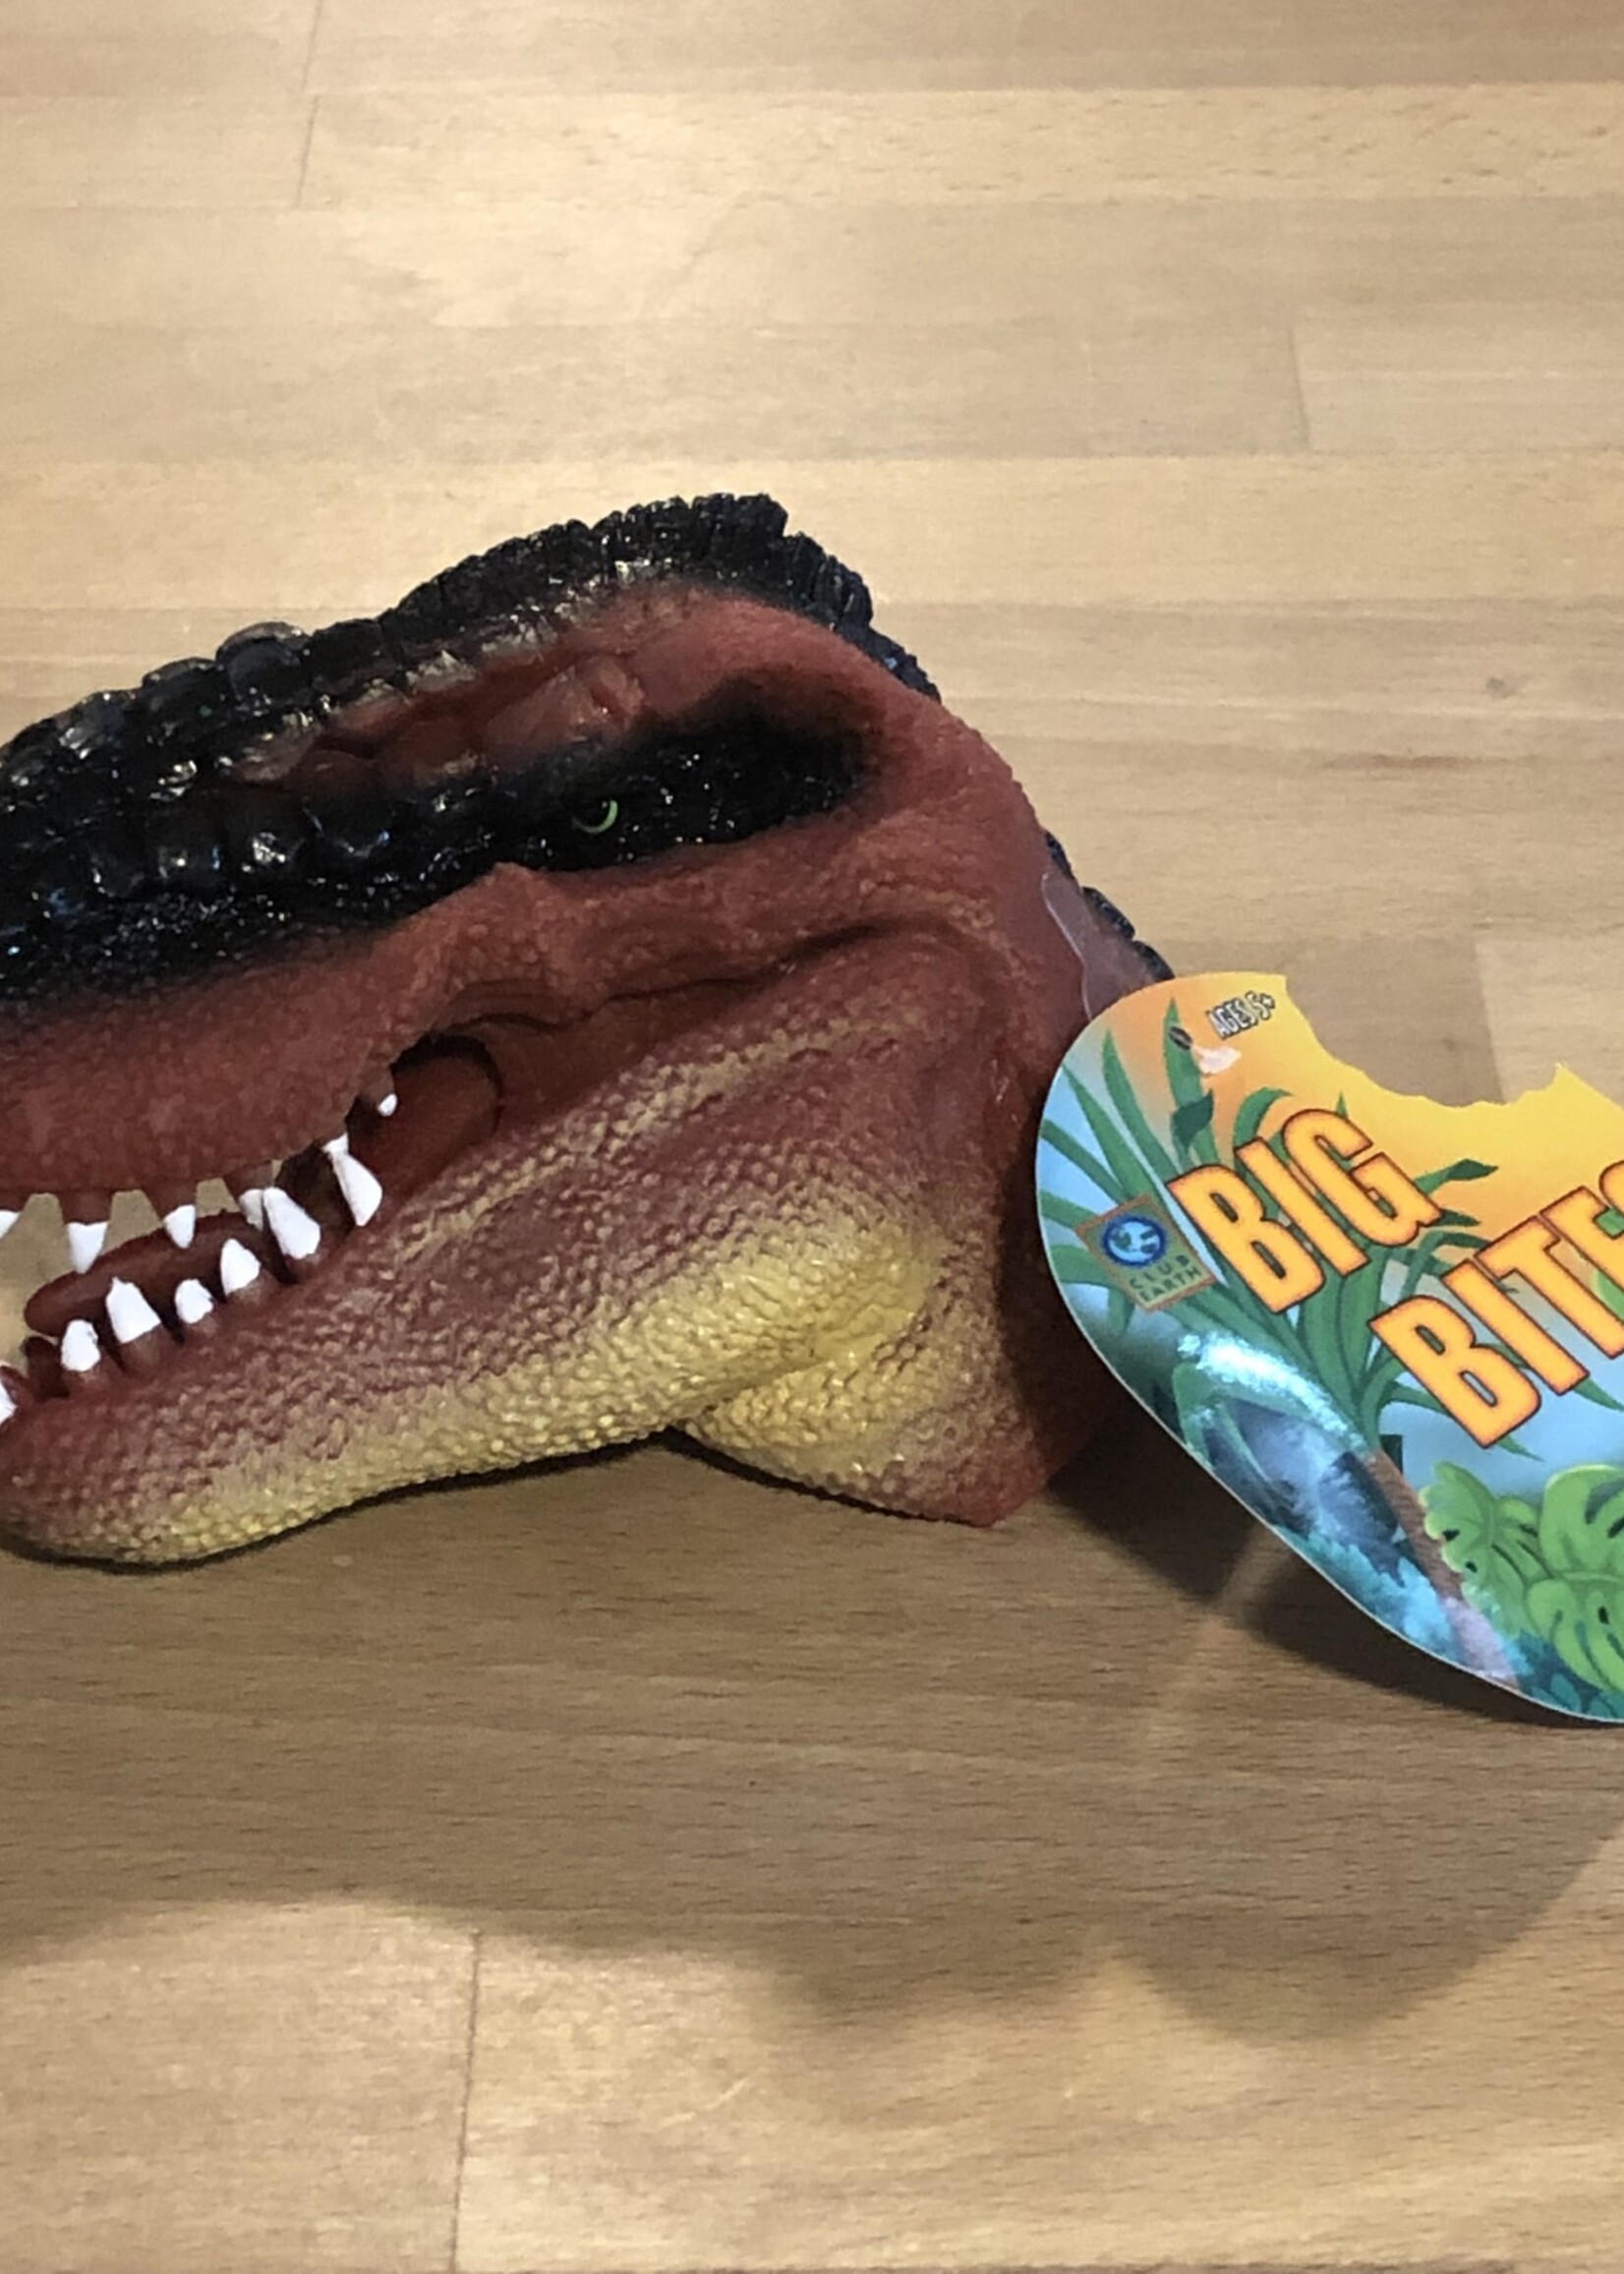 Dinosaur Big Bites